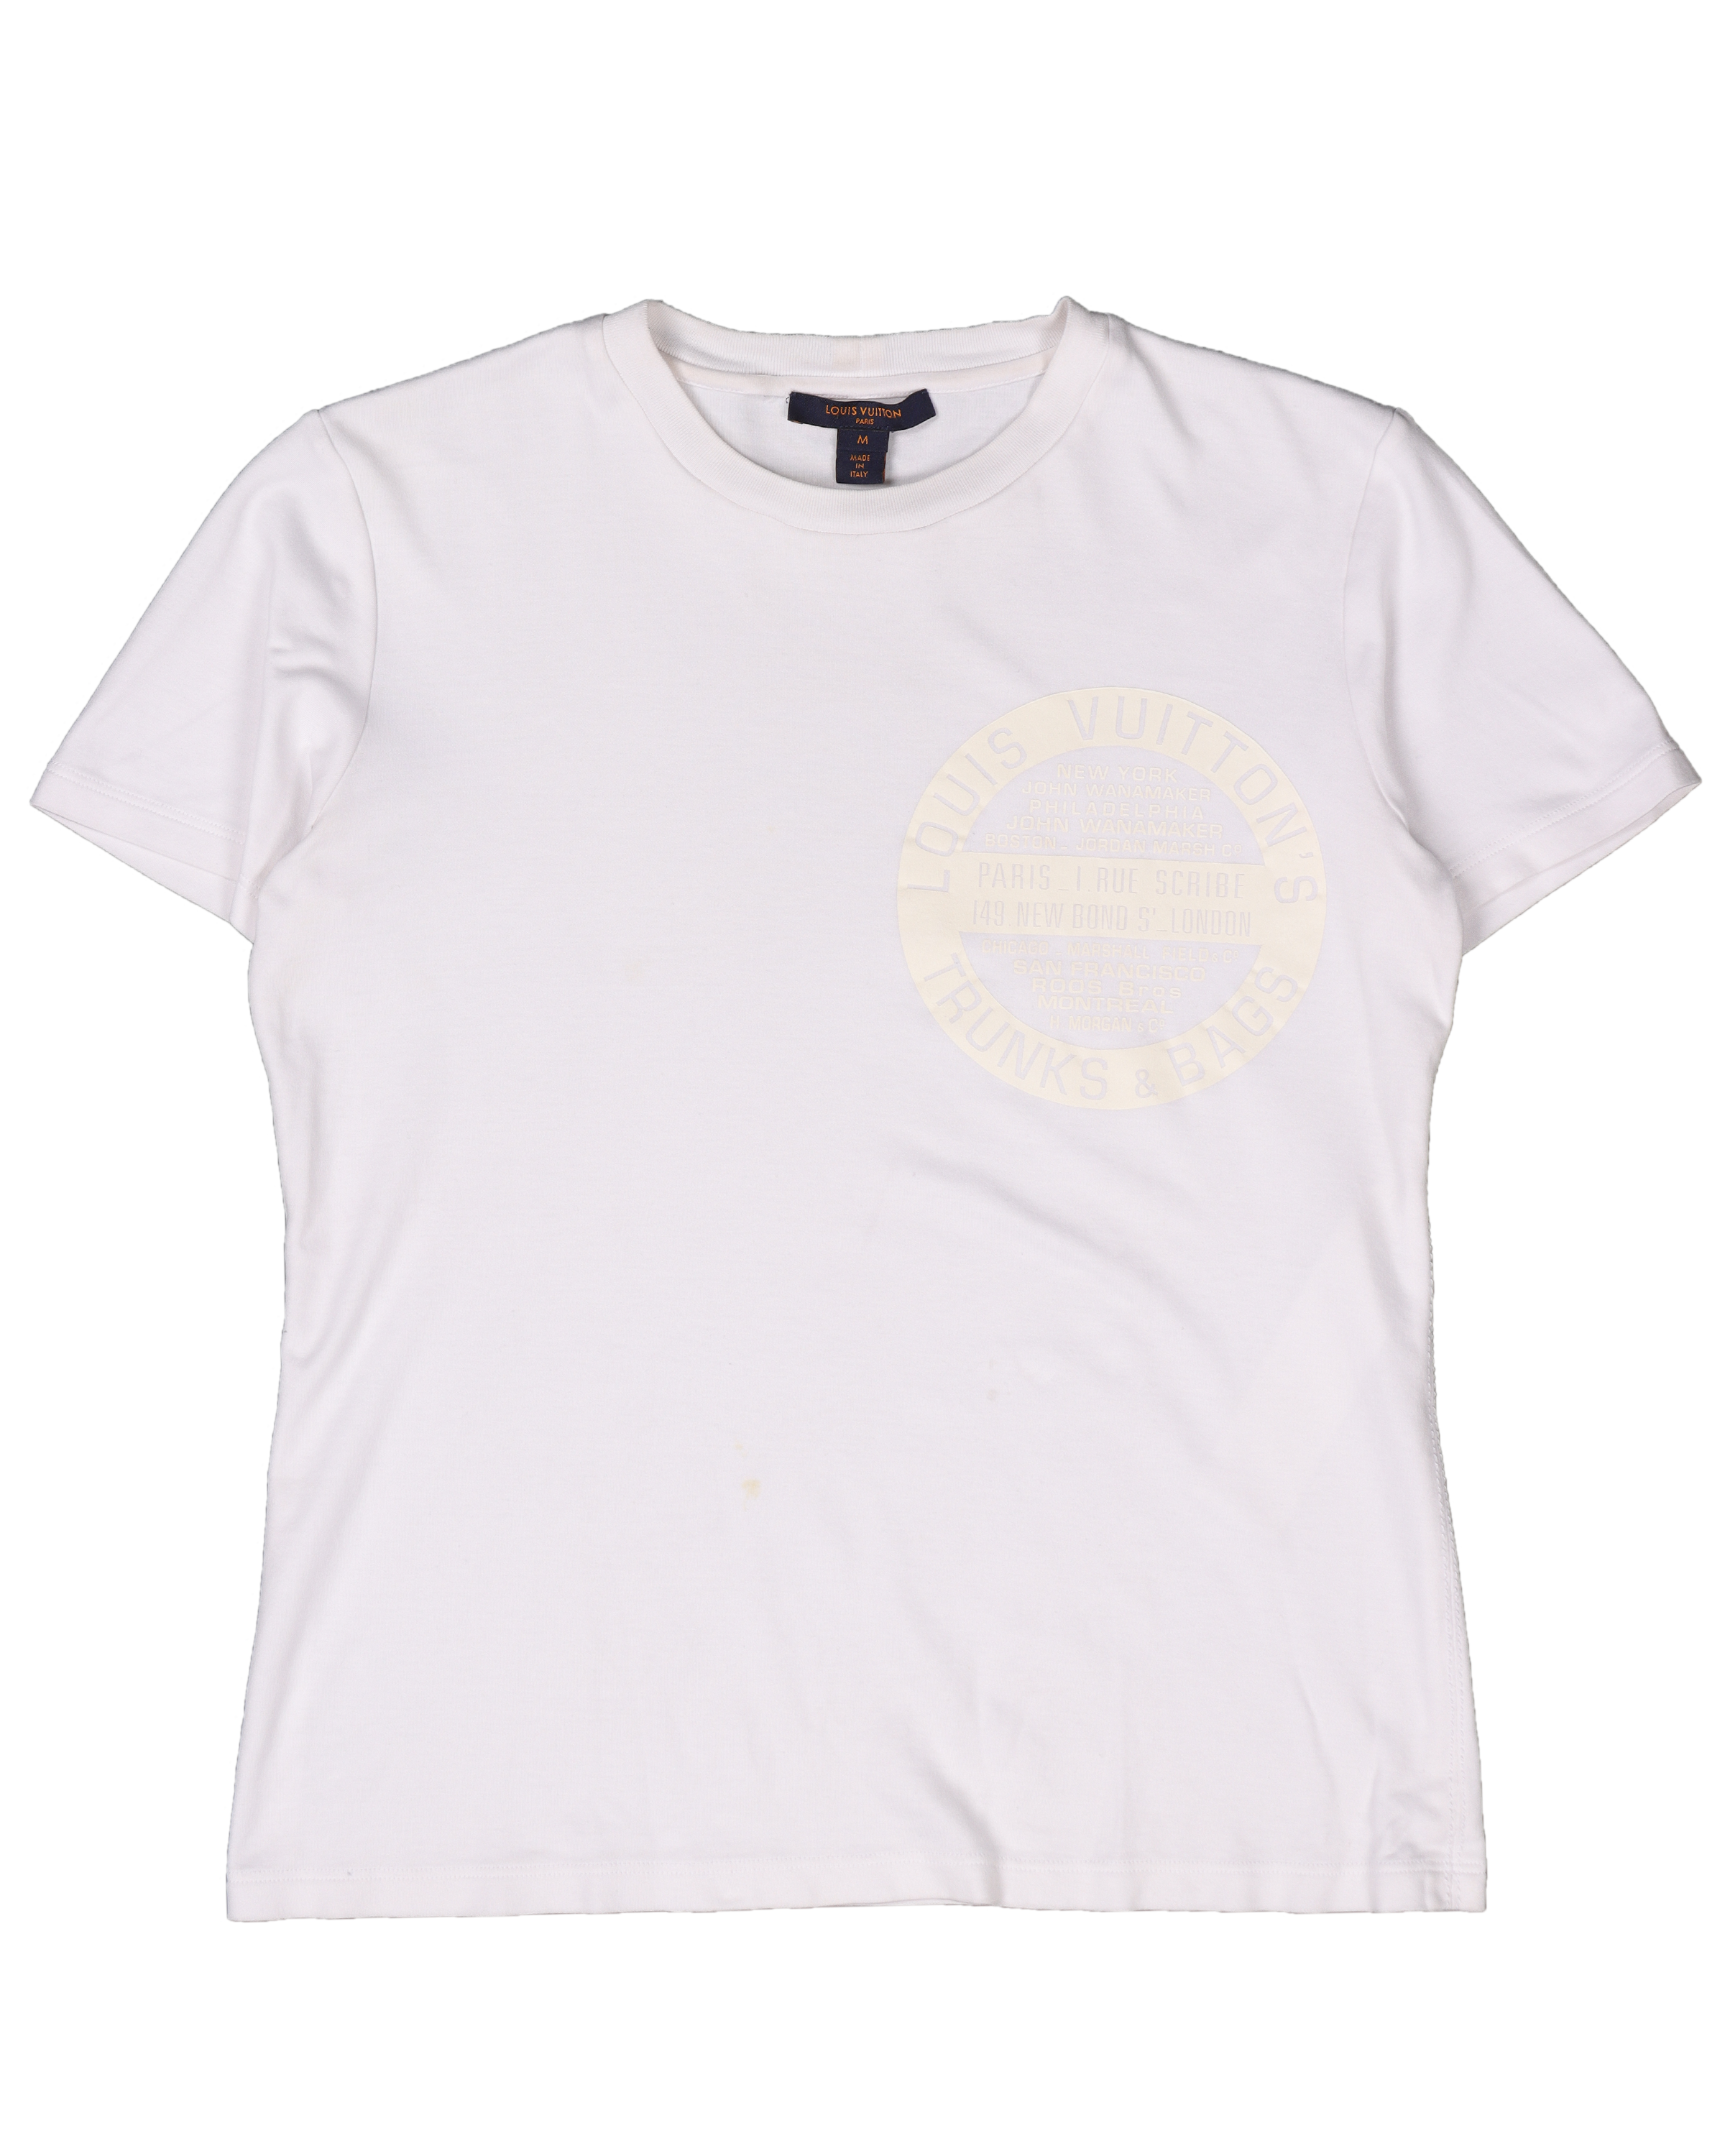 Louis Vuitton Black White Monogram T-shirt - Size Small